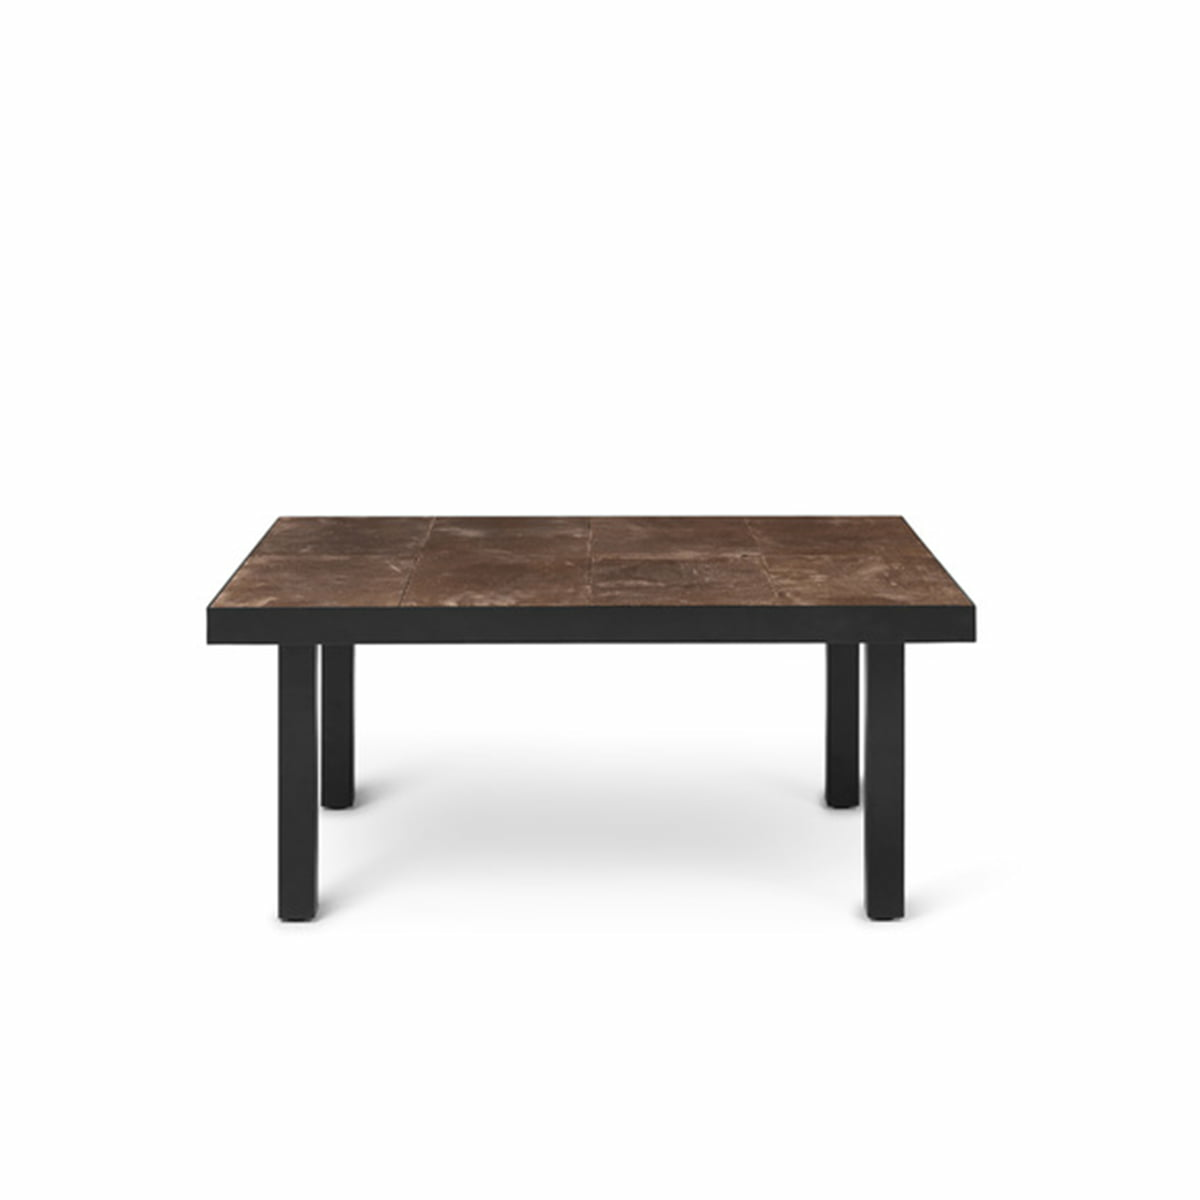 ferm Living Flod Kachel-Beistelltisch Tisch Sofatisch 61 x 81 cm mokka schwarz